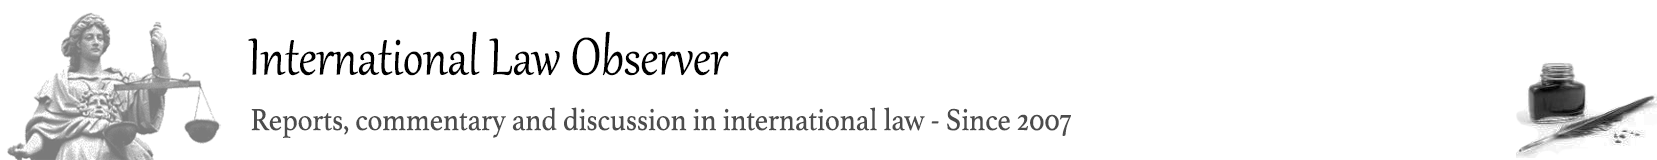 International Law Observer